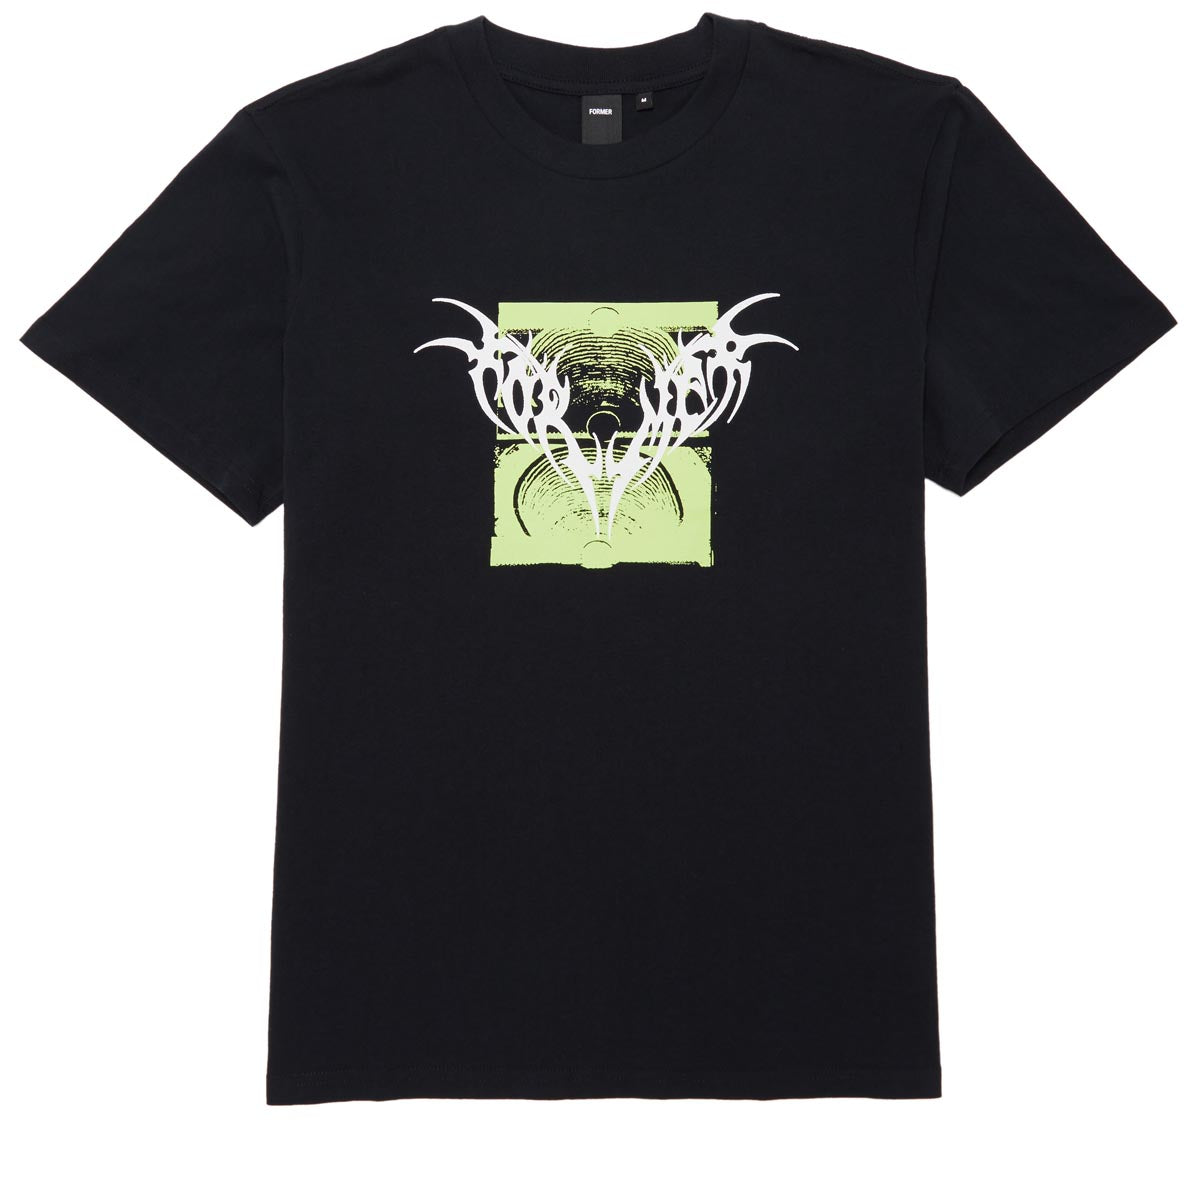 Former Tribal Crux T-Shirt - Black image 1